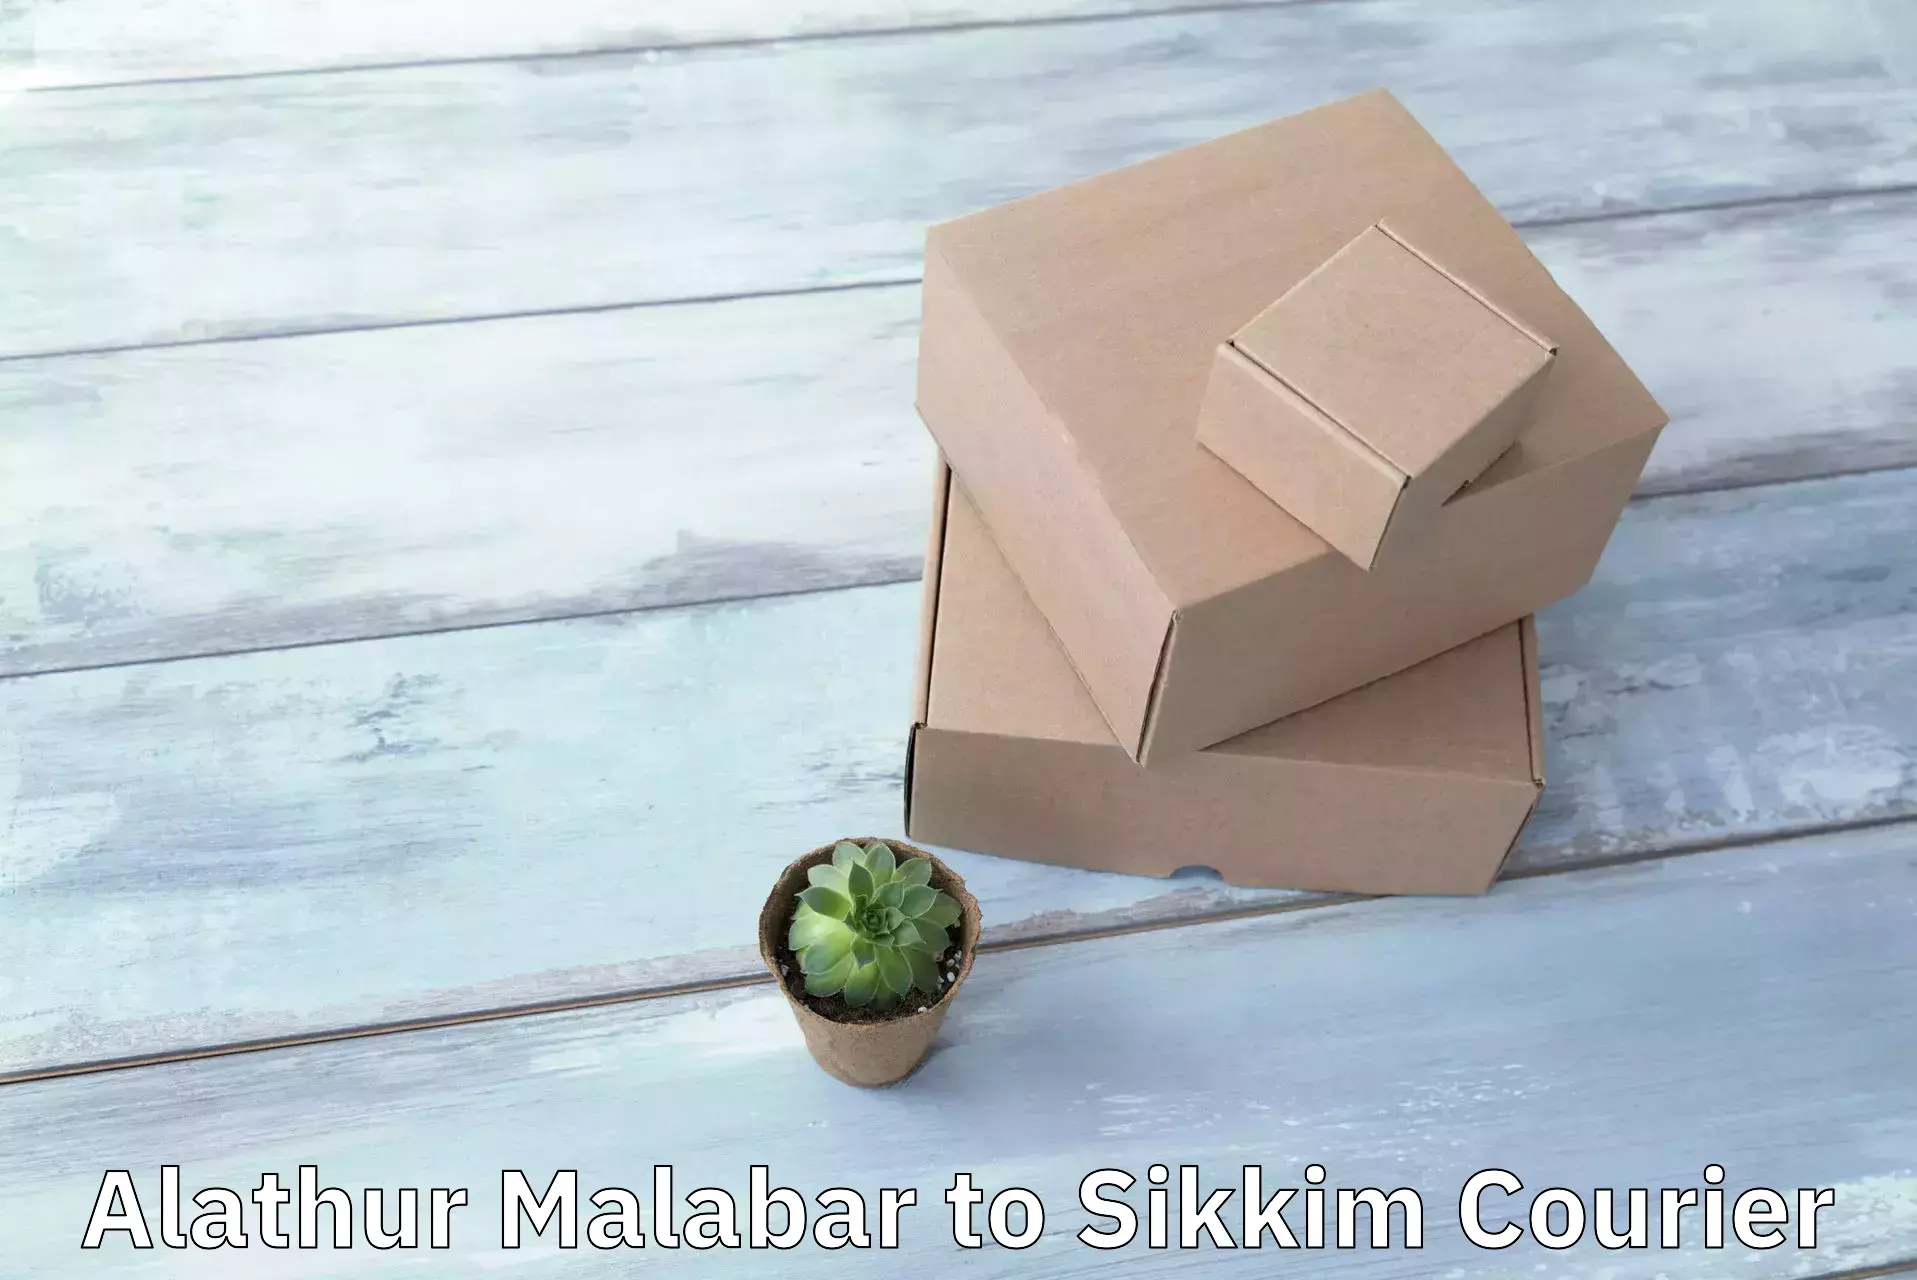 Custom courier packaging Alathur Malabar to Pelling